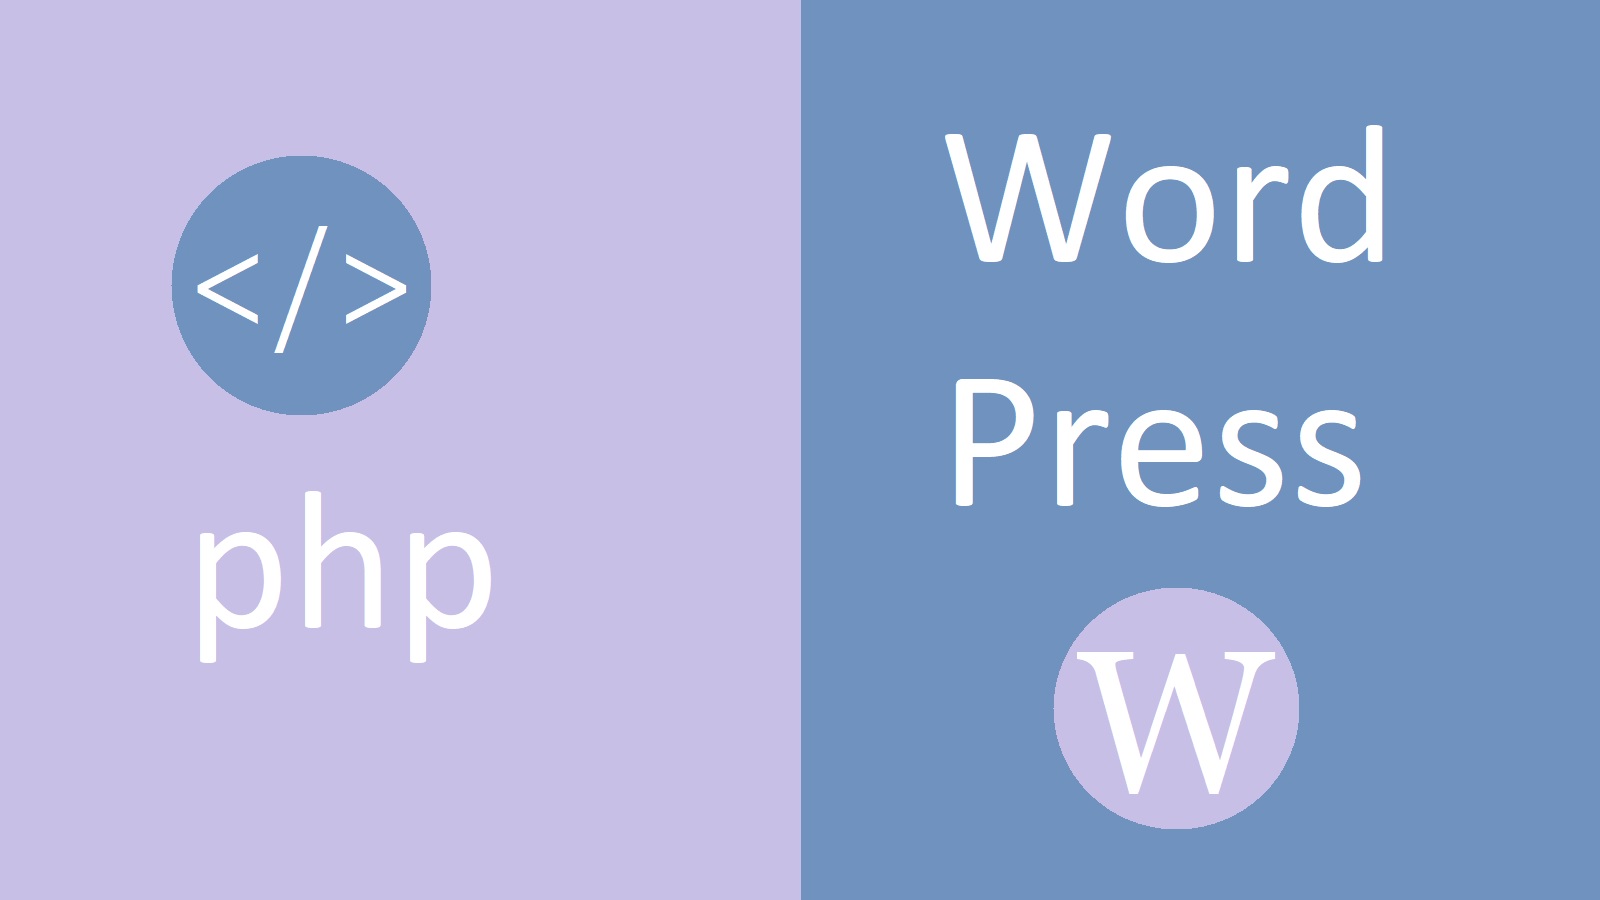 php-wordpress